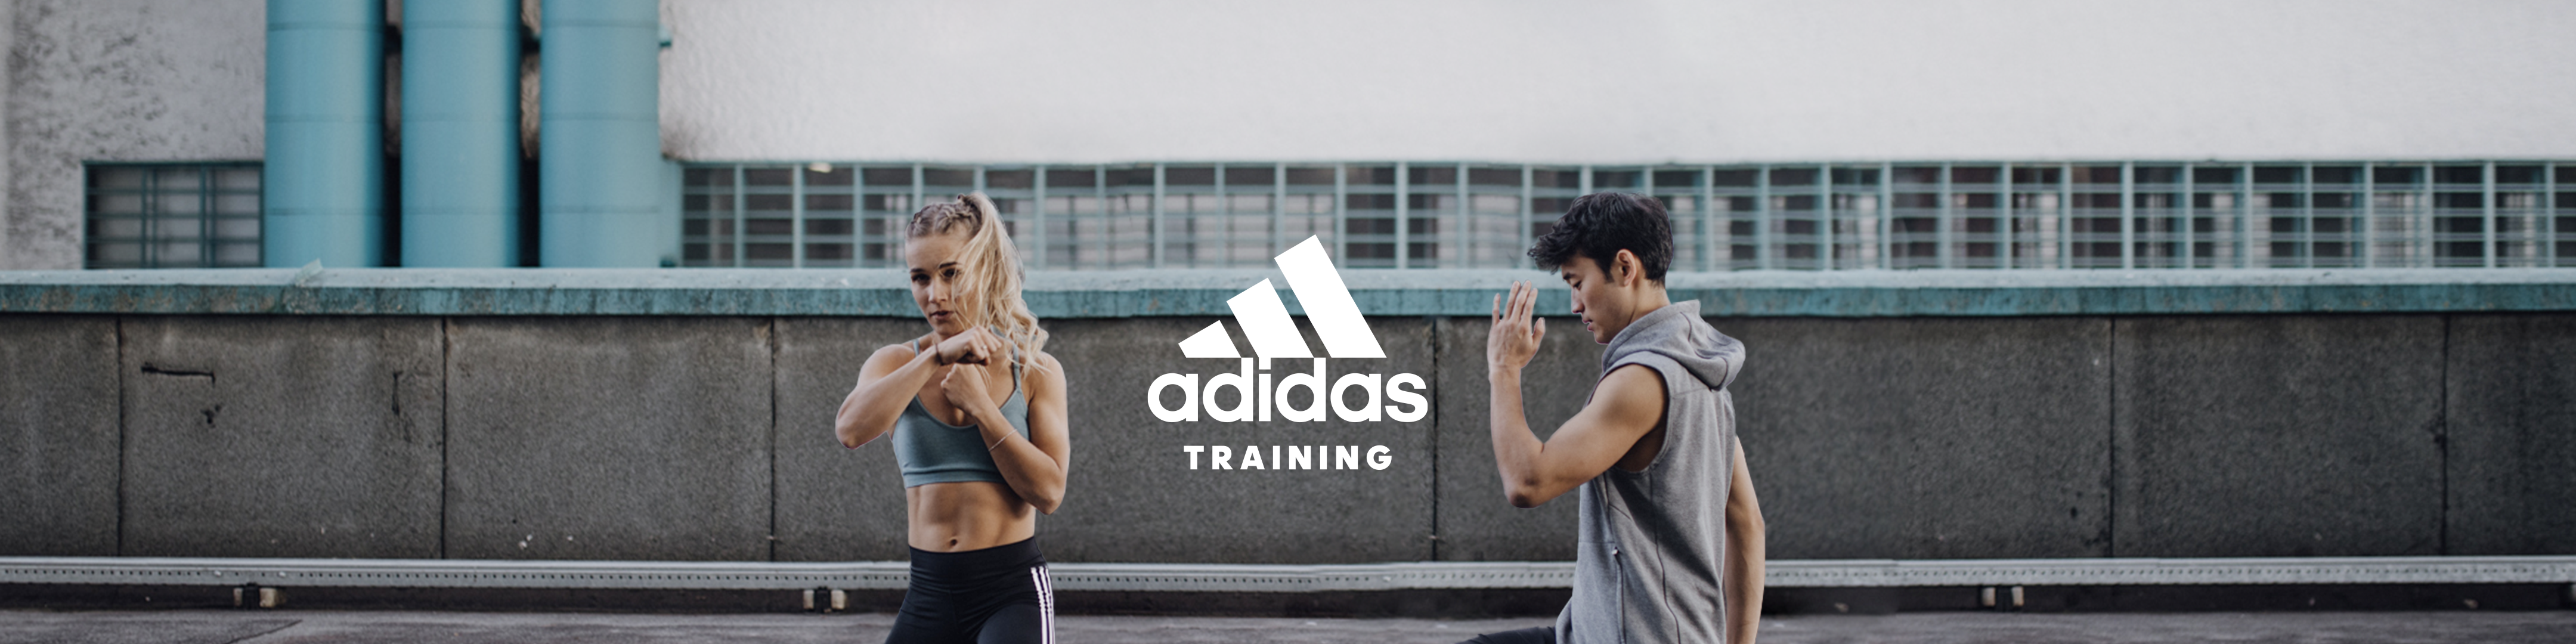 adidas training runtastic